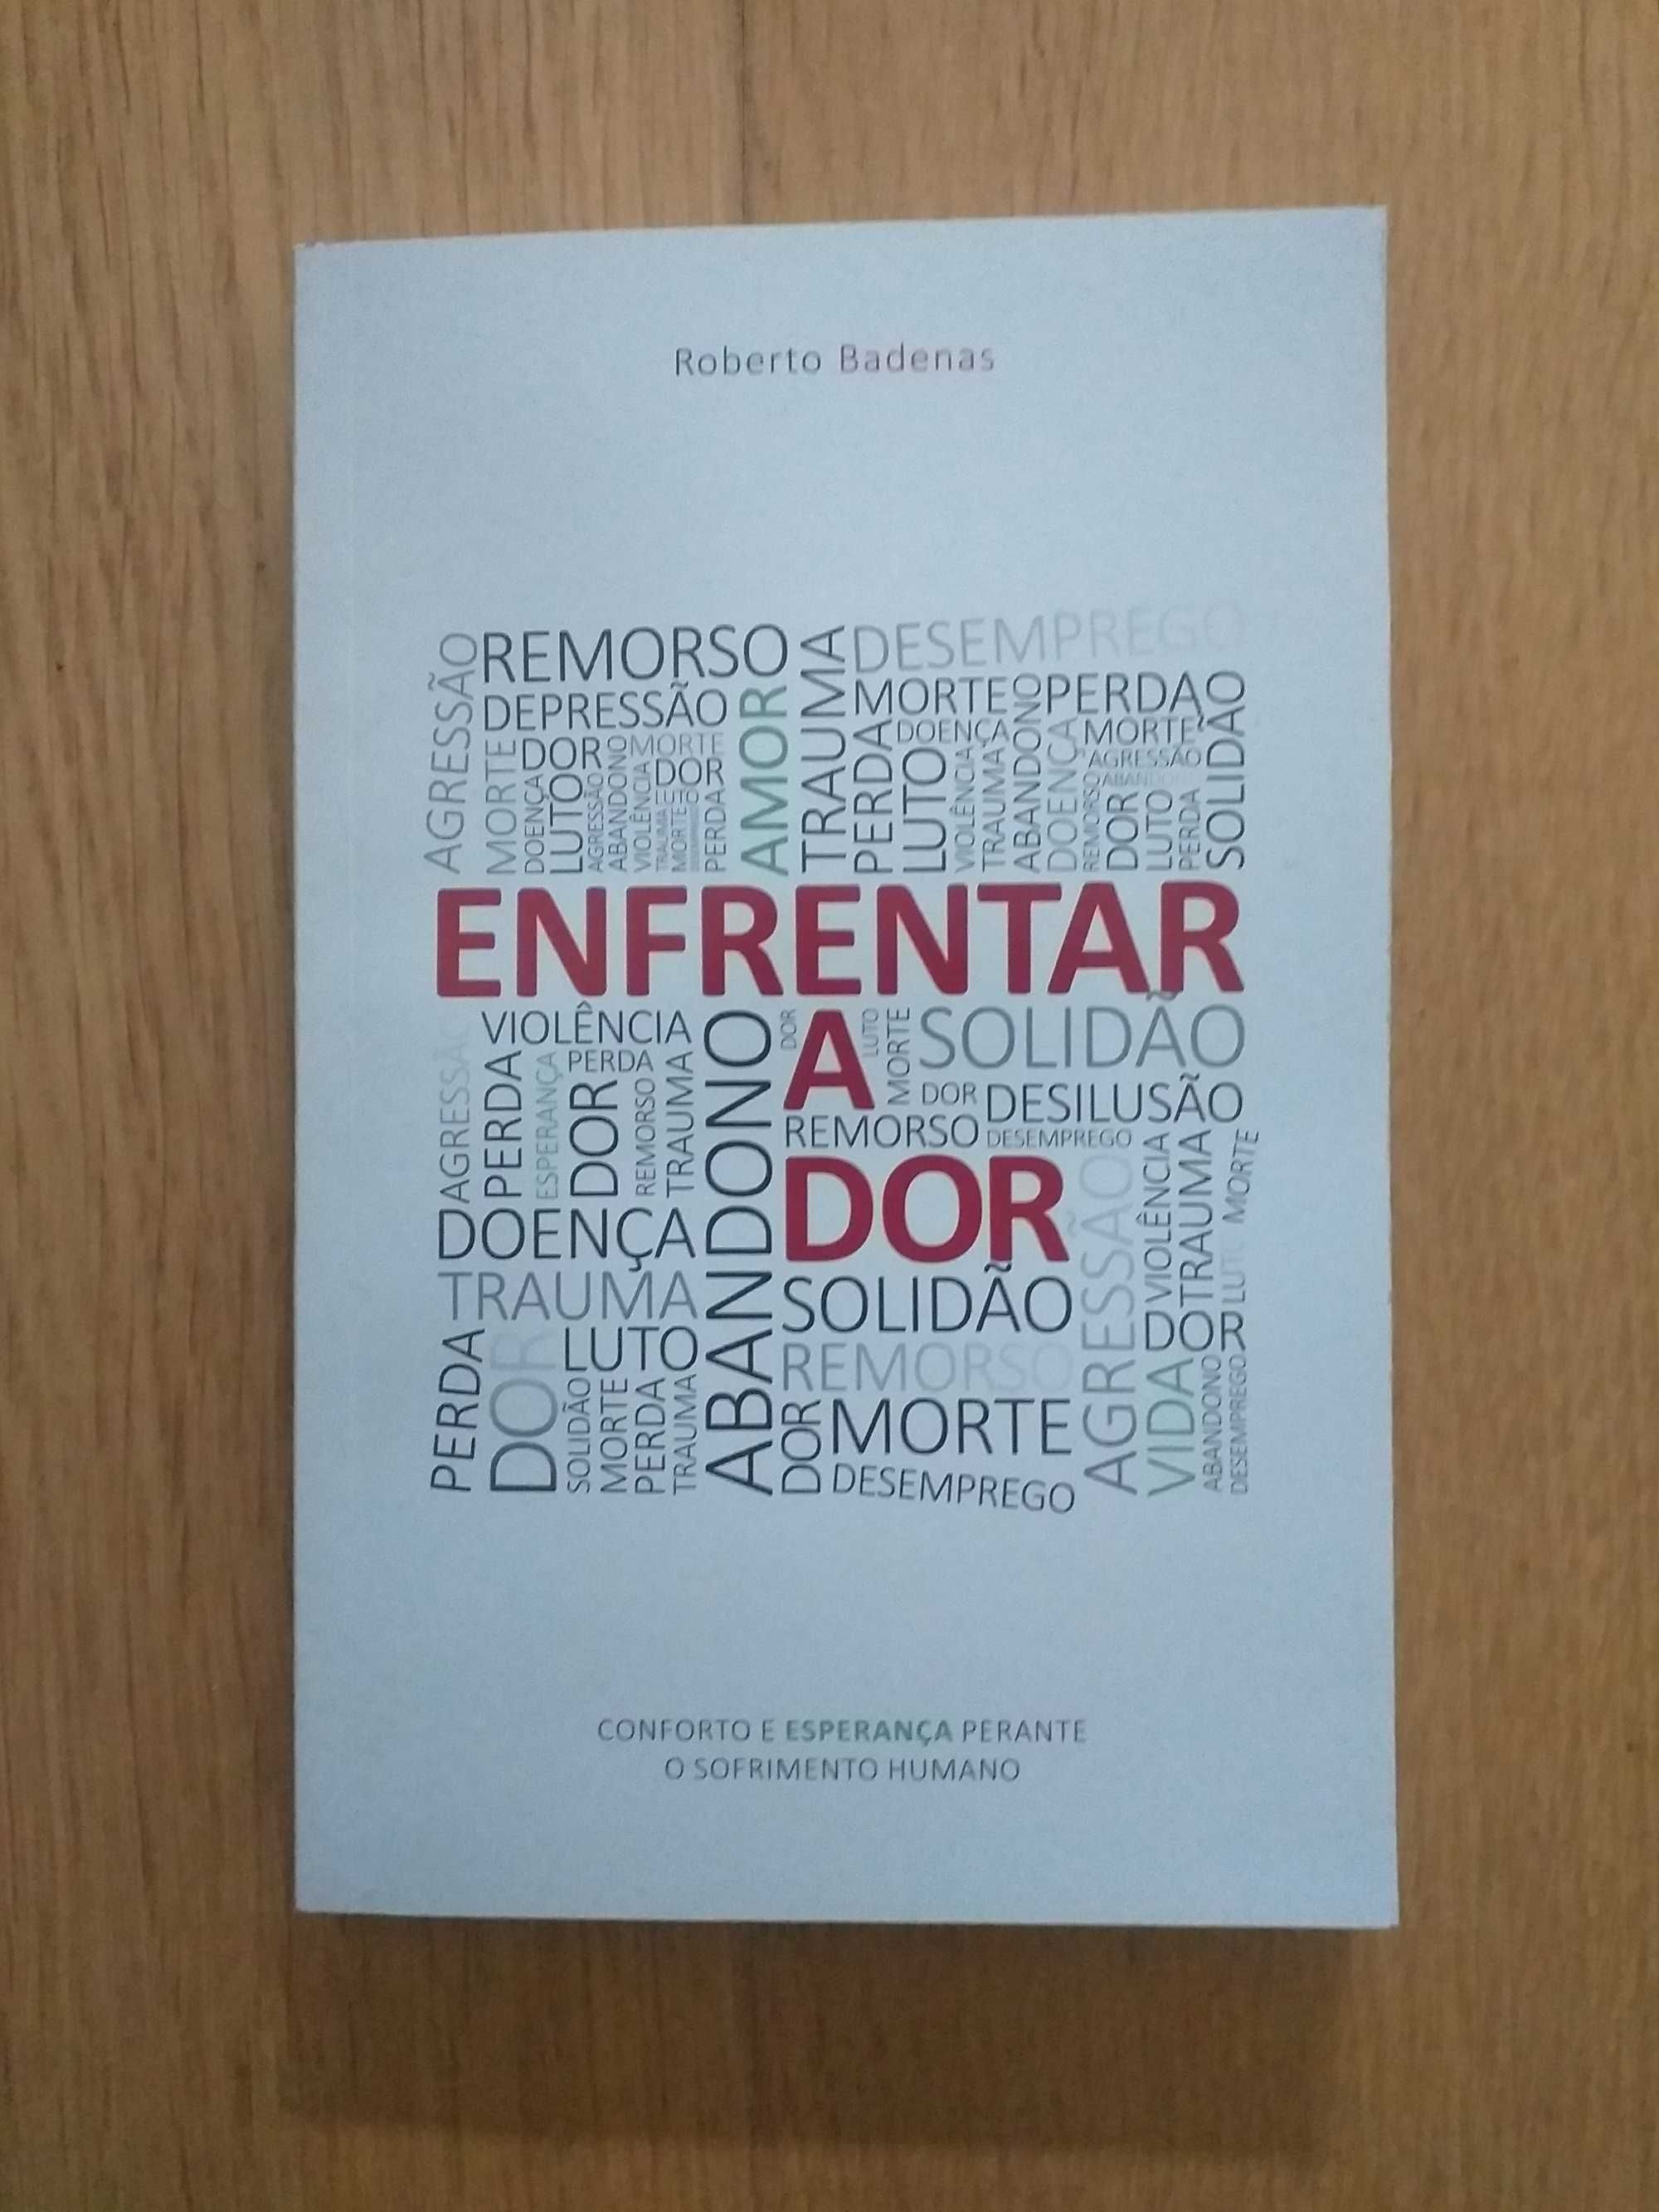 Livro "Como Enfrentar a Dor" de Roberto Badenas, como novo